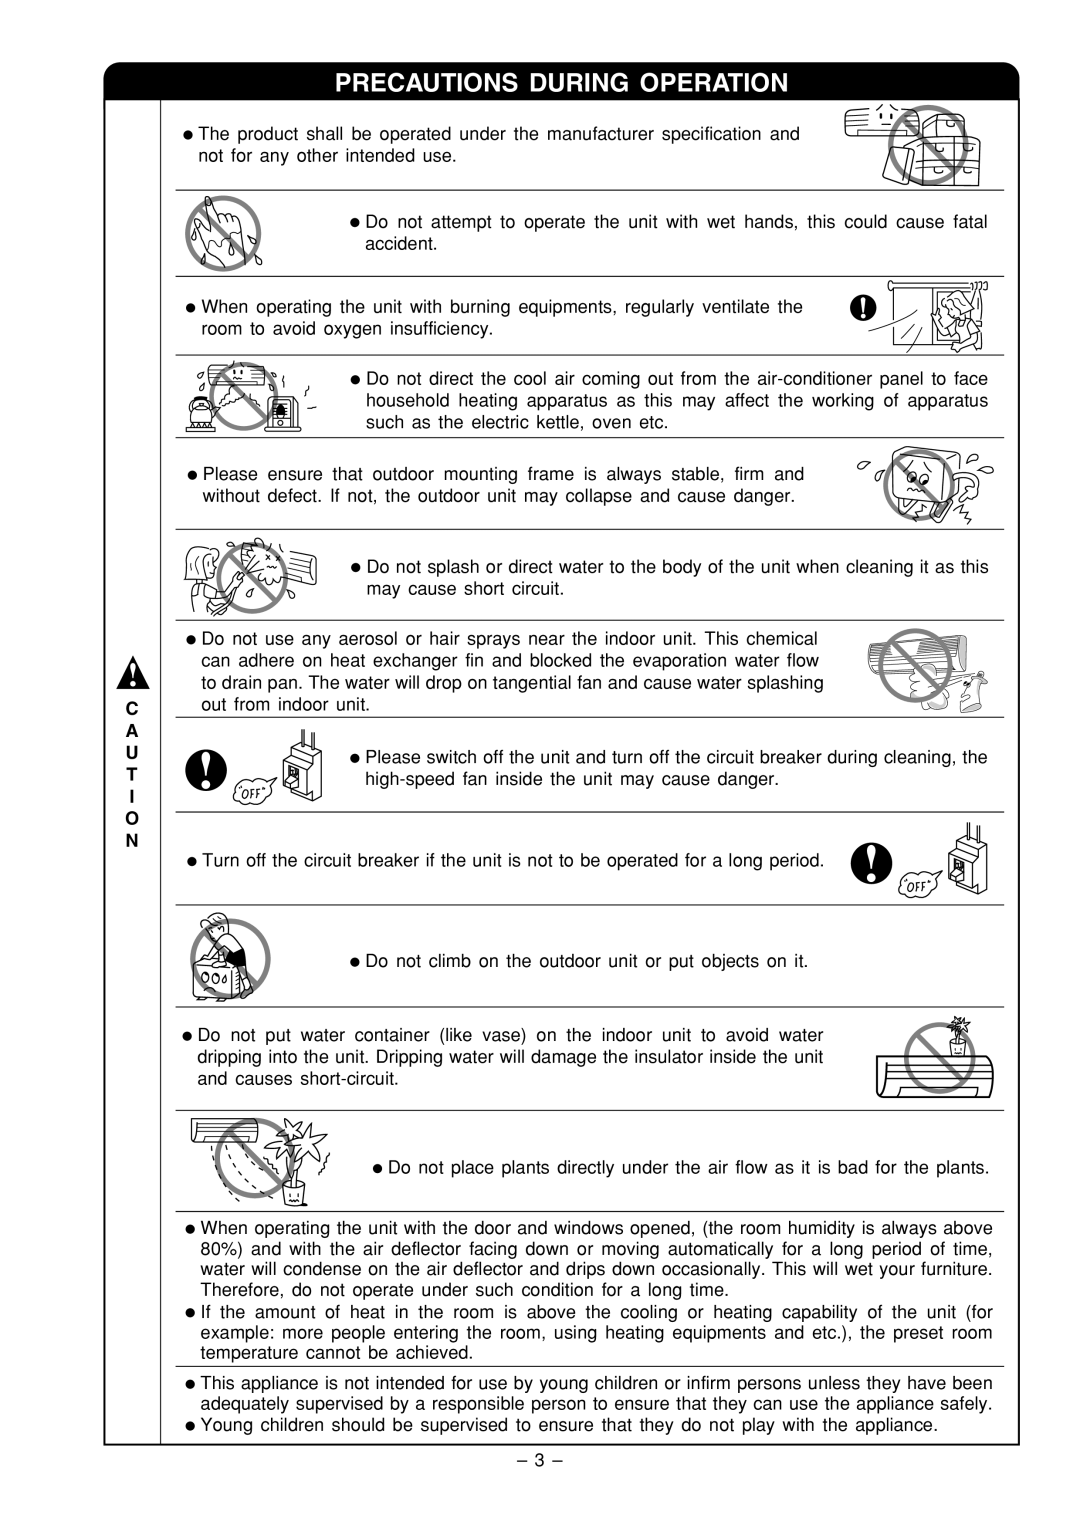 Hitachi RAS-80YHA instruction manual Precautions During Operation, C A U T I O N 